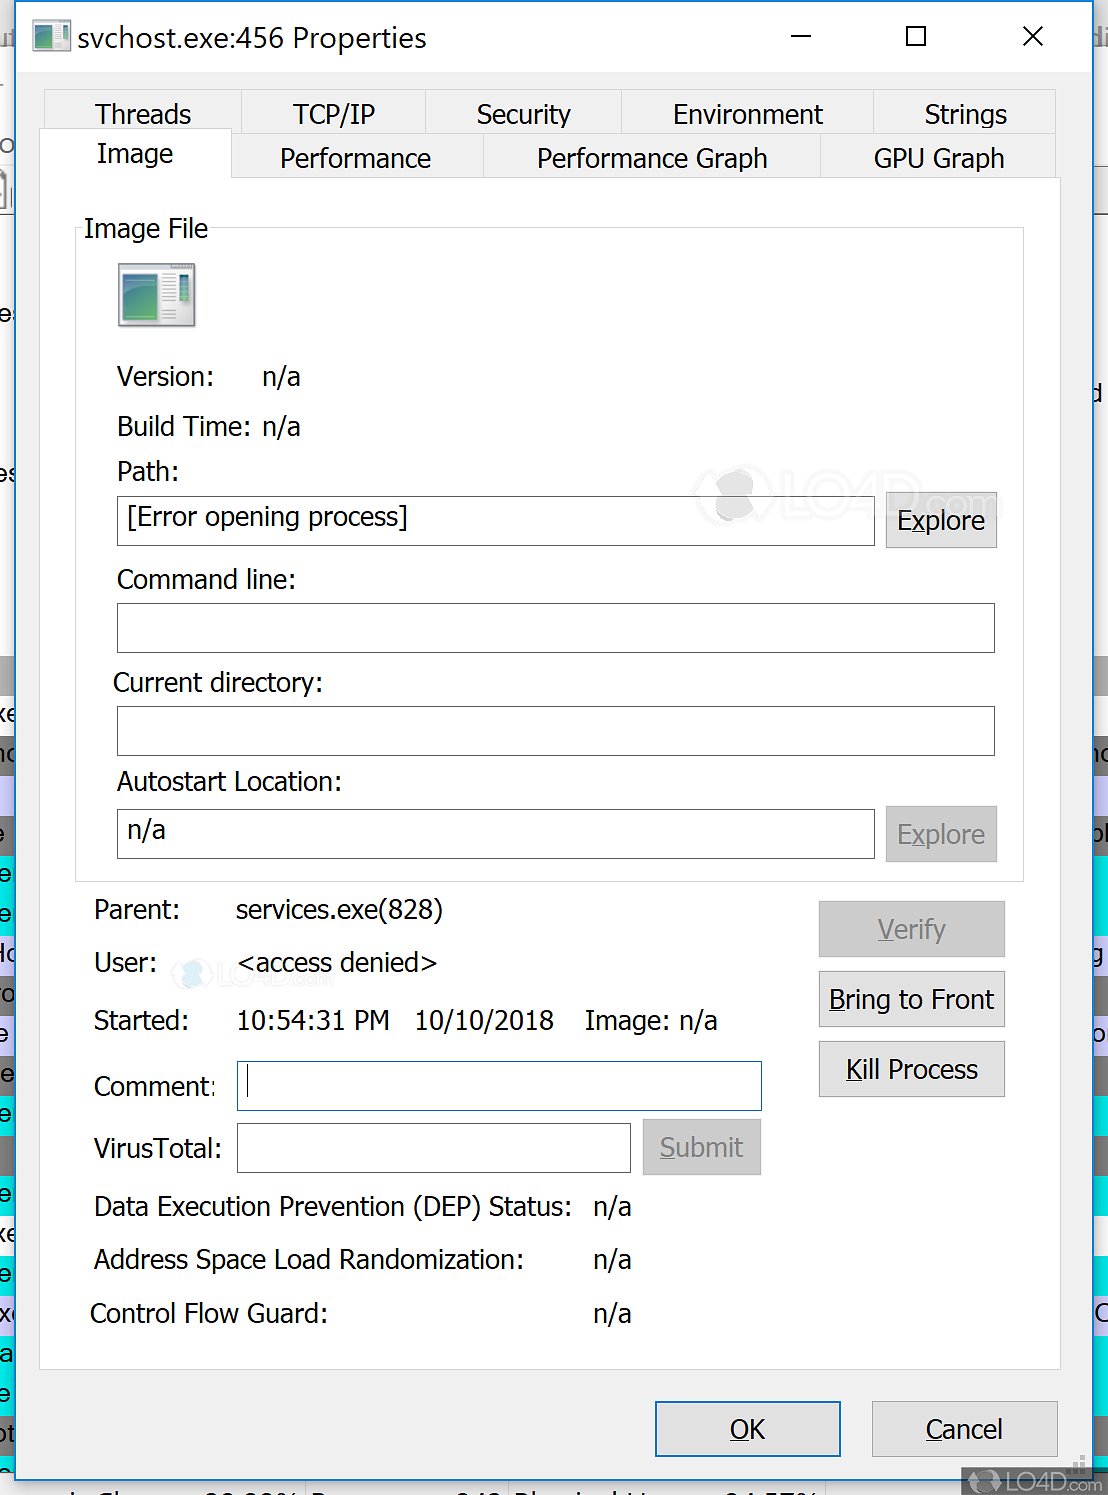 Process Explorer 17.05 download the new version